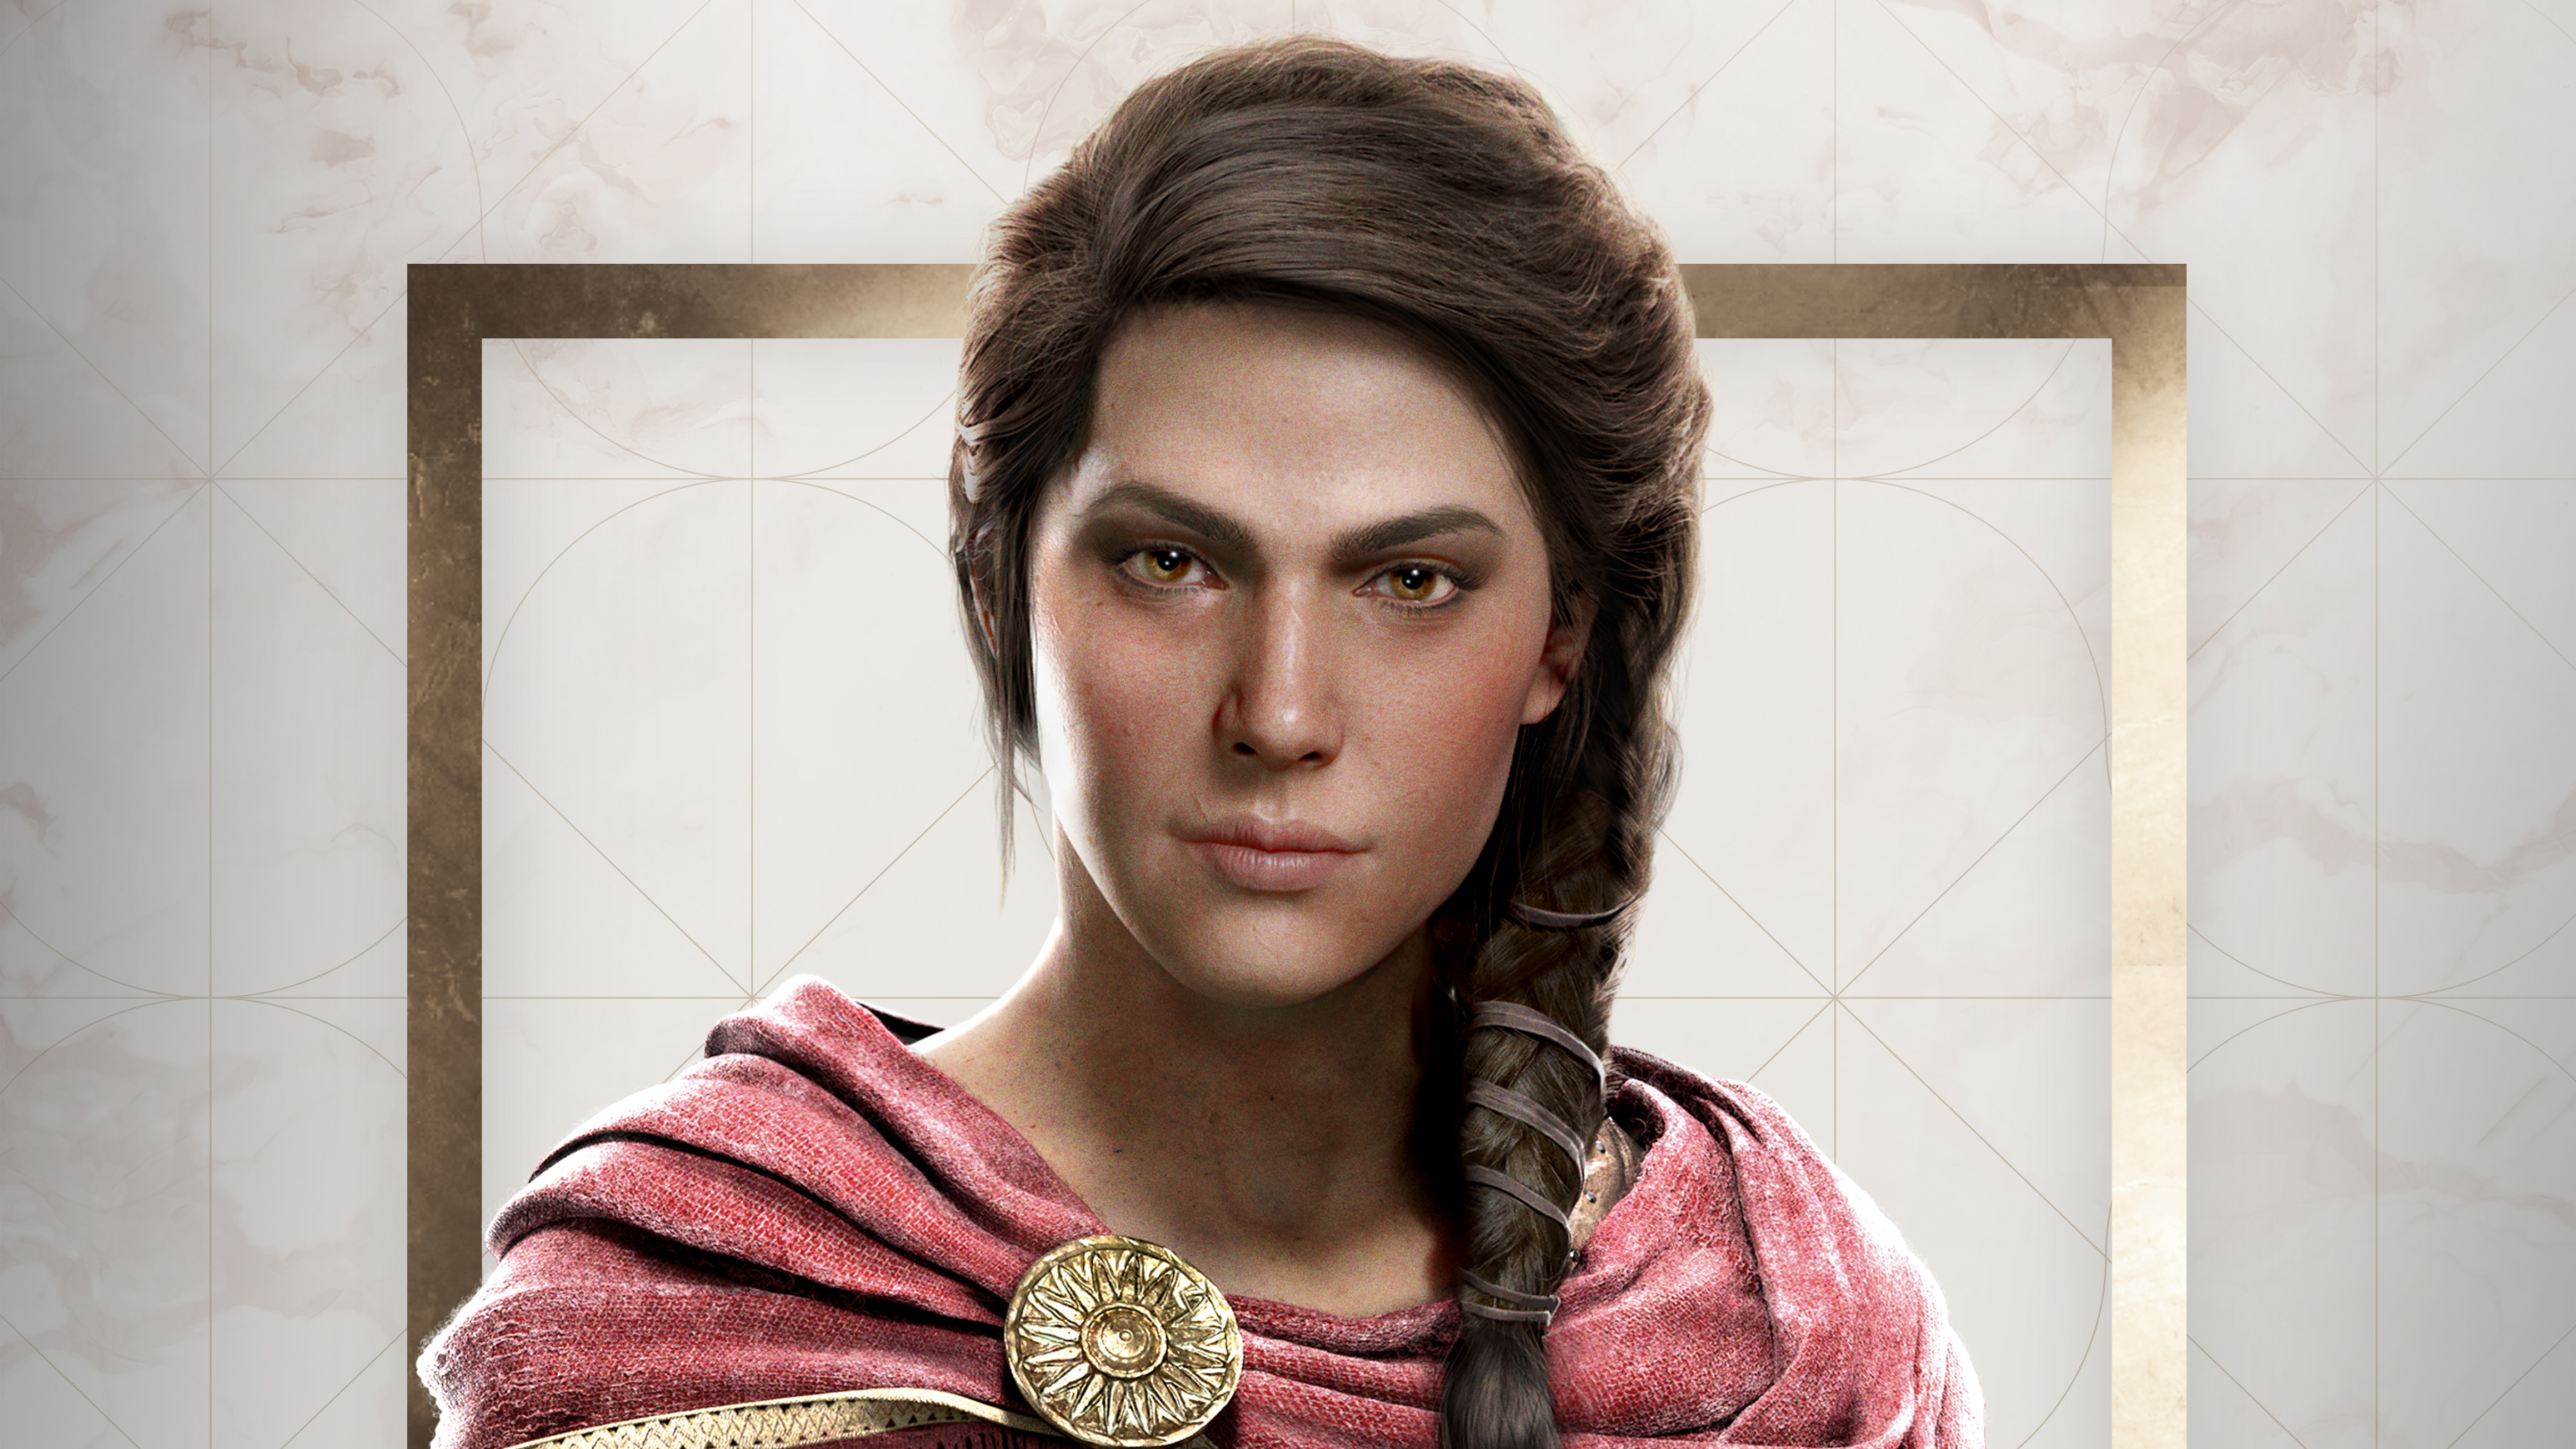 Kassandra Assassins Creed Odyssey 4k Hd Games 4k Wallpapers Images 8665